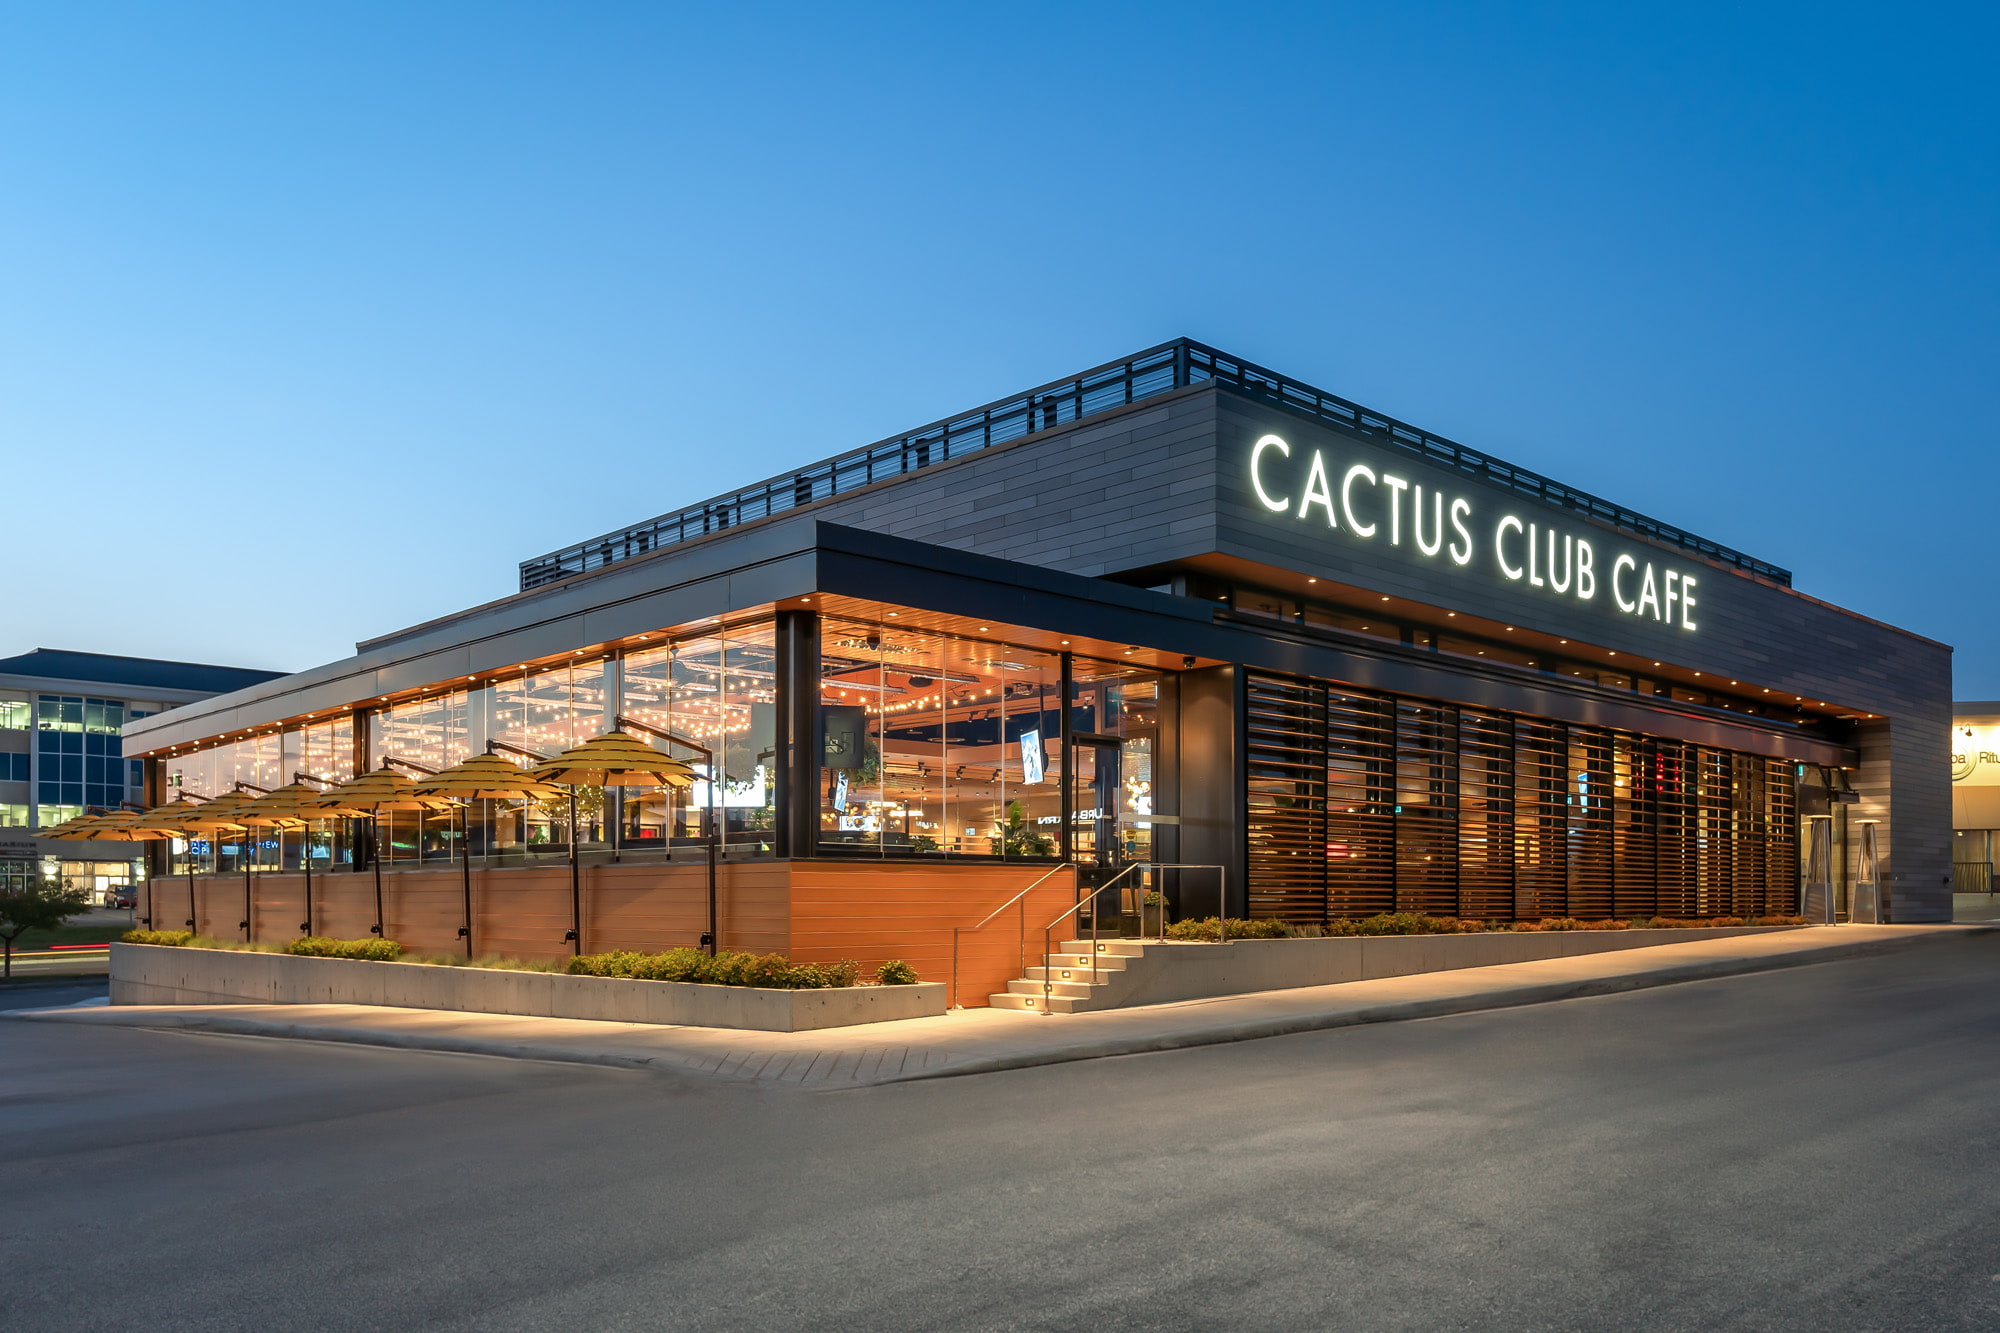 Cactus Club Cafe (1)